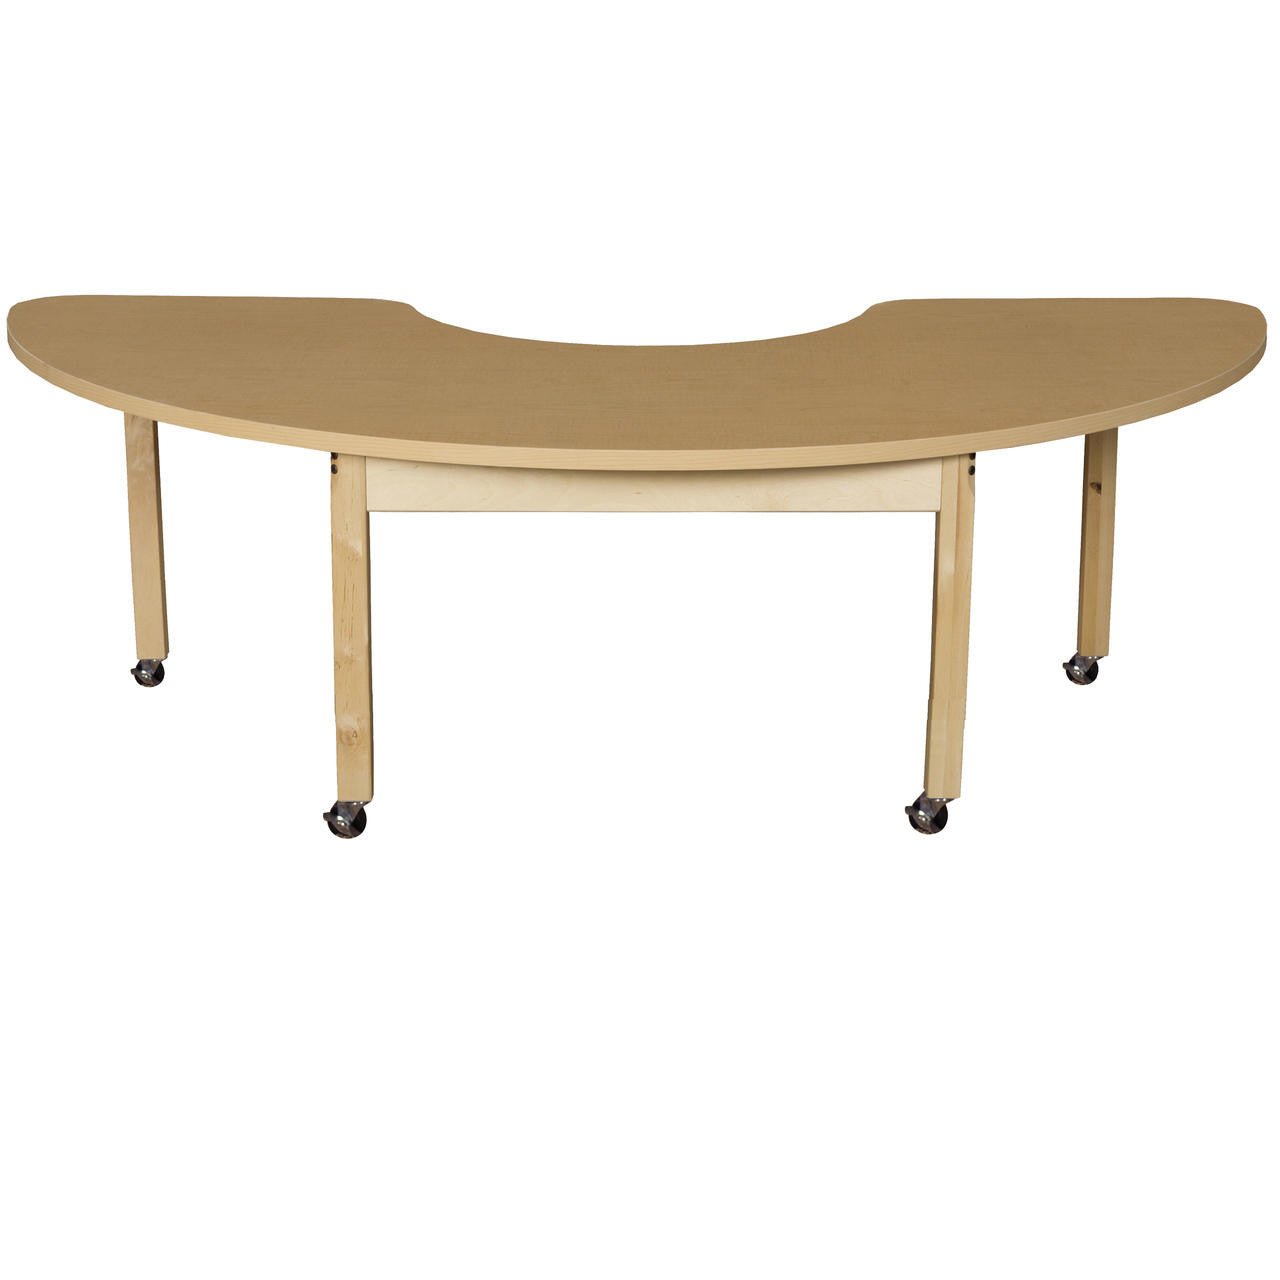 Mobile Half Circle High Pressure Laminate Table with Hardwood Legs 14"